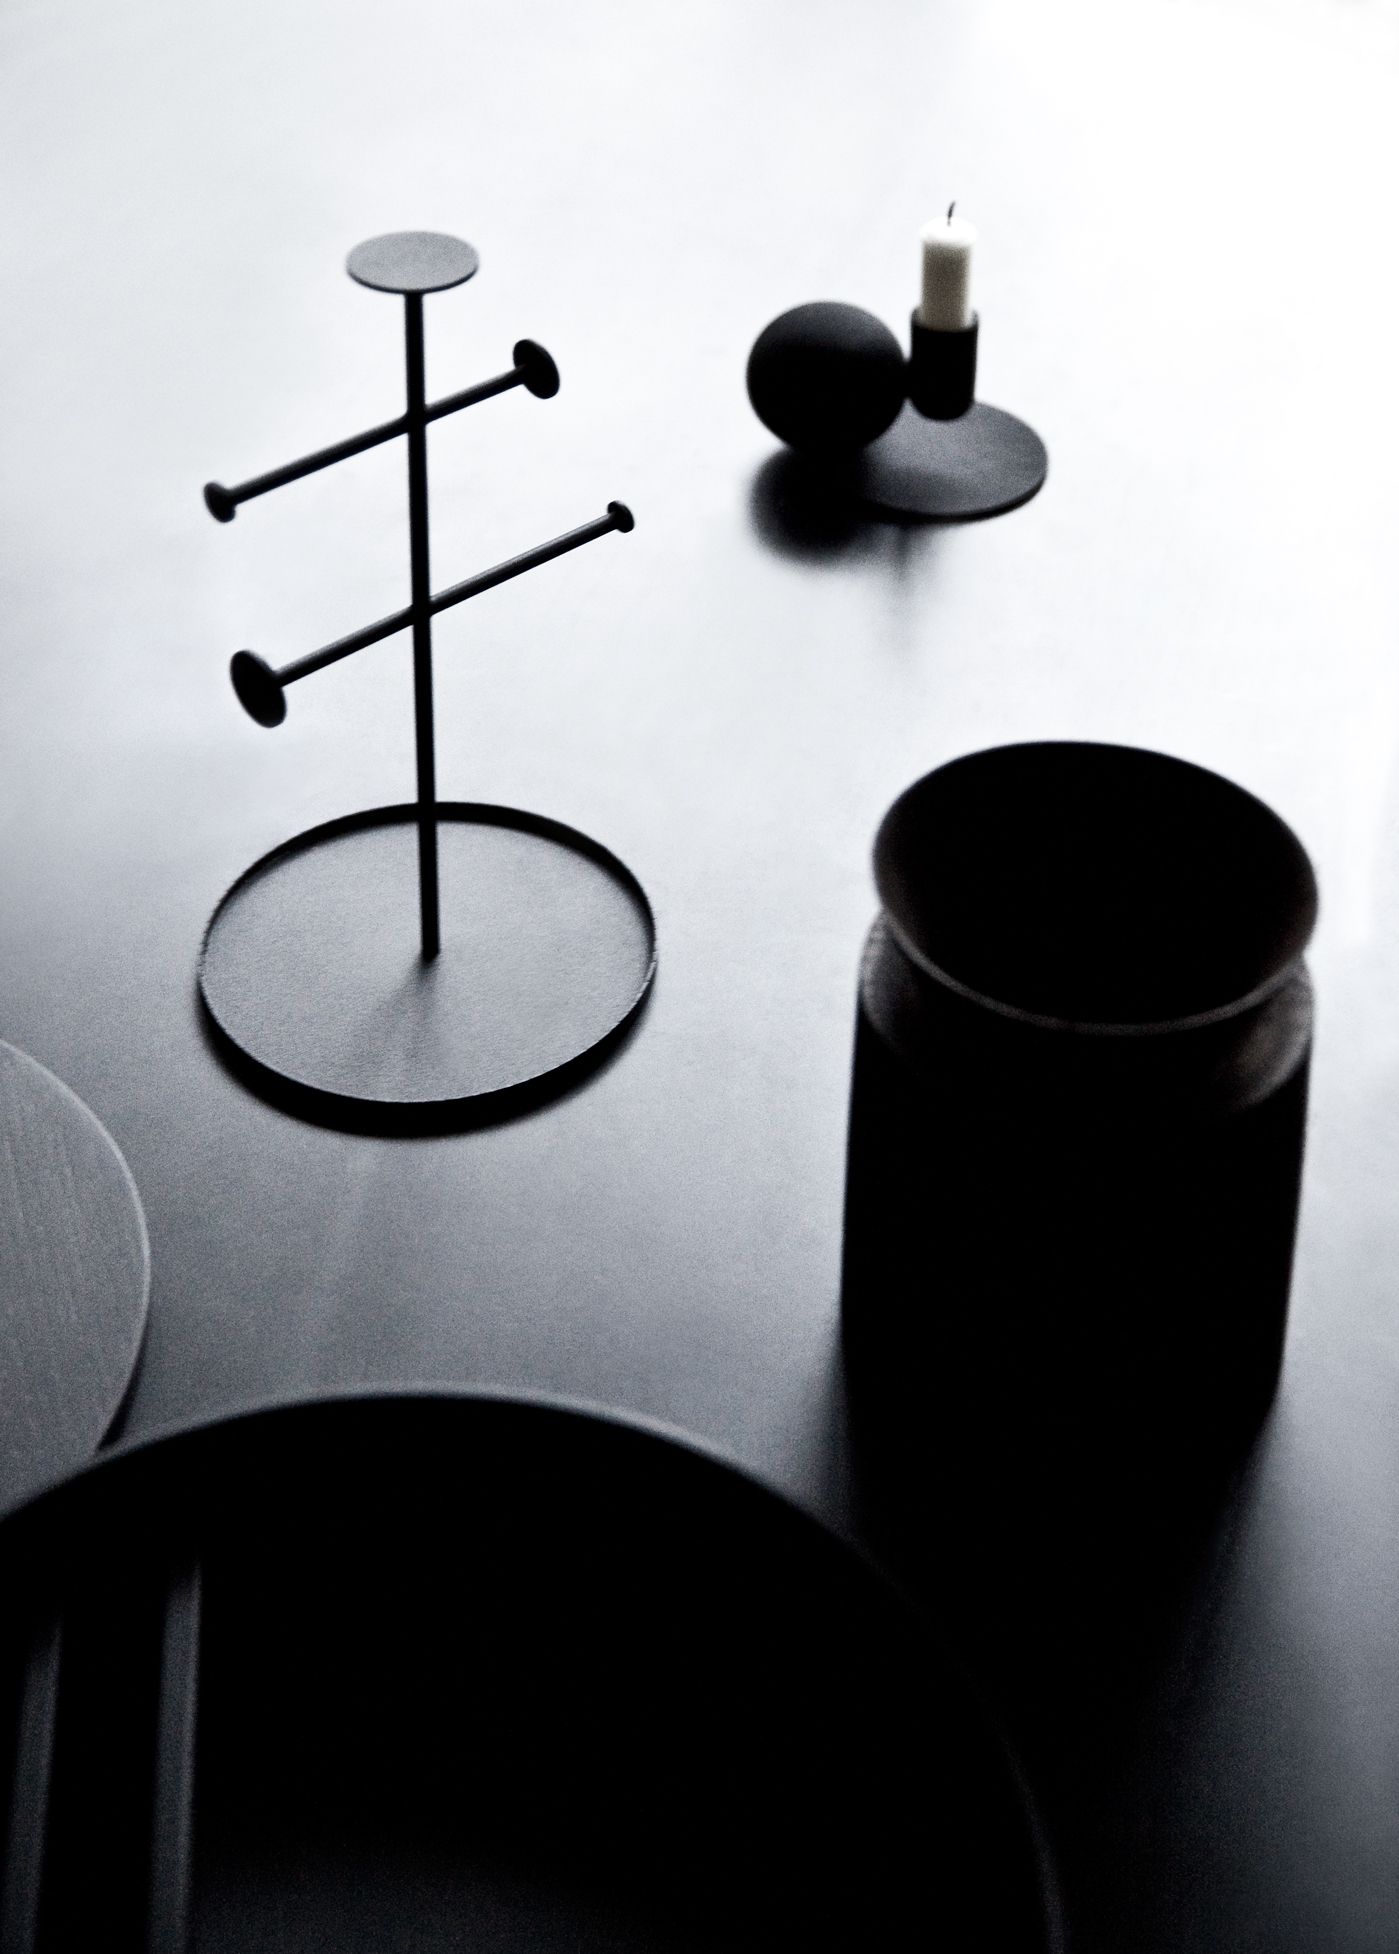 Optical Candleholder designed by Jonas Stokke